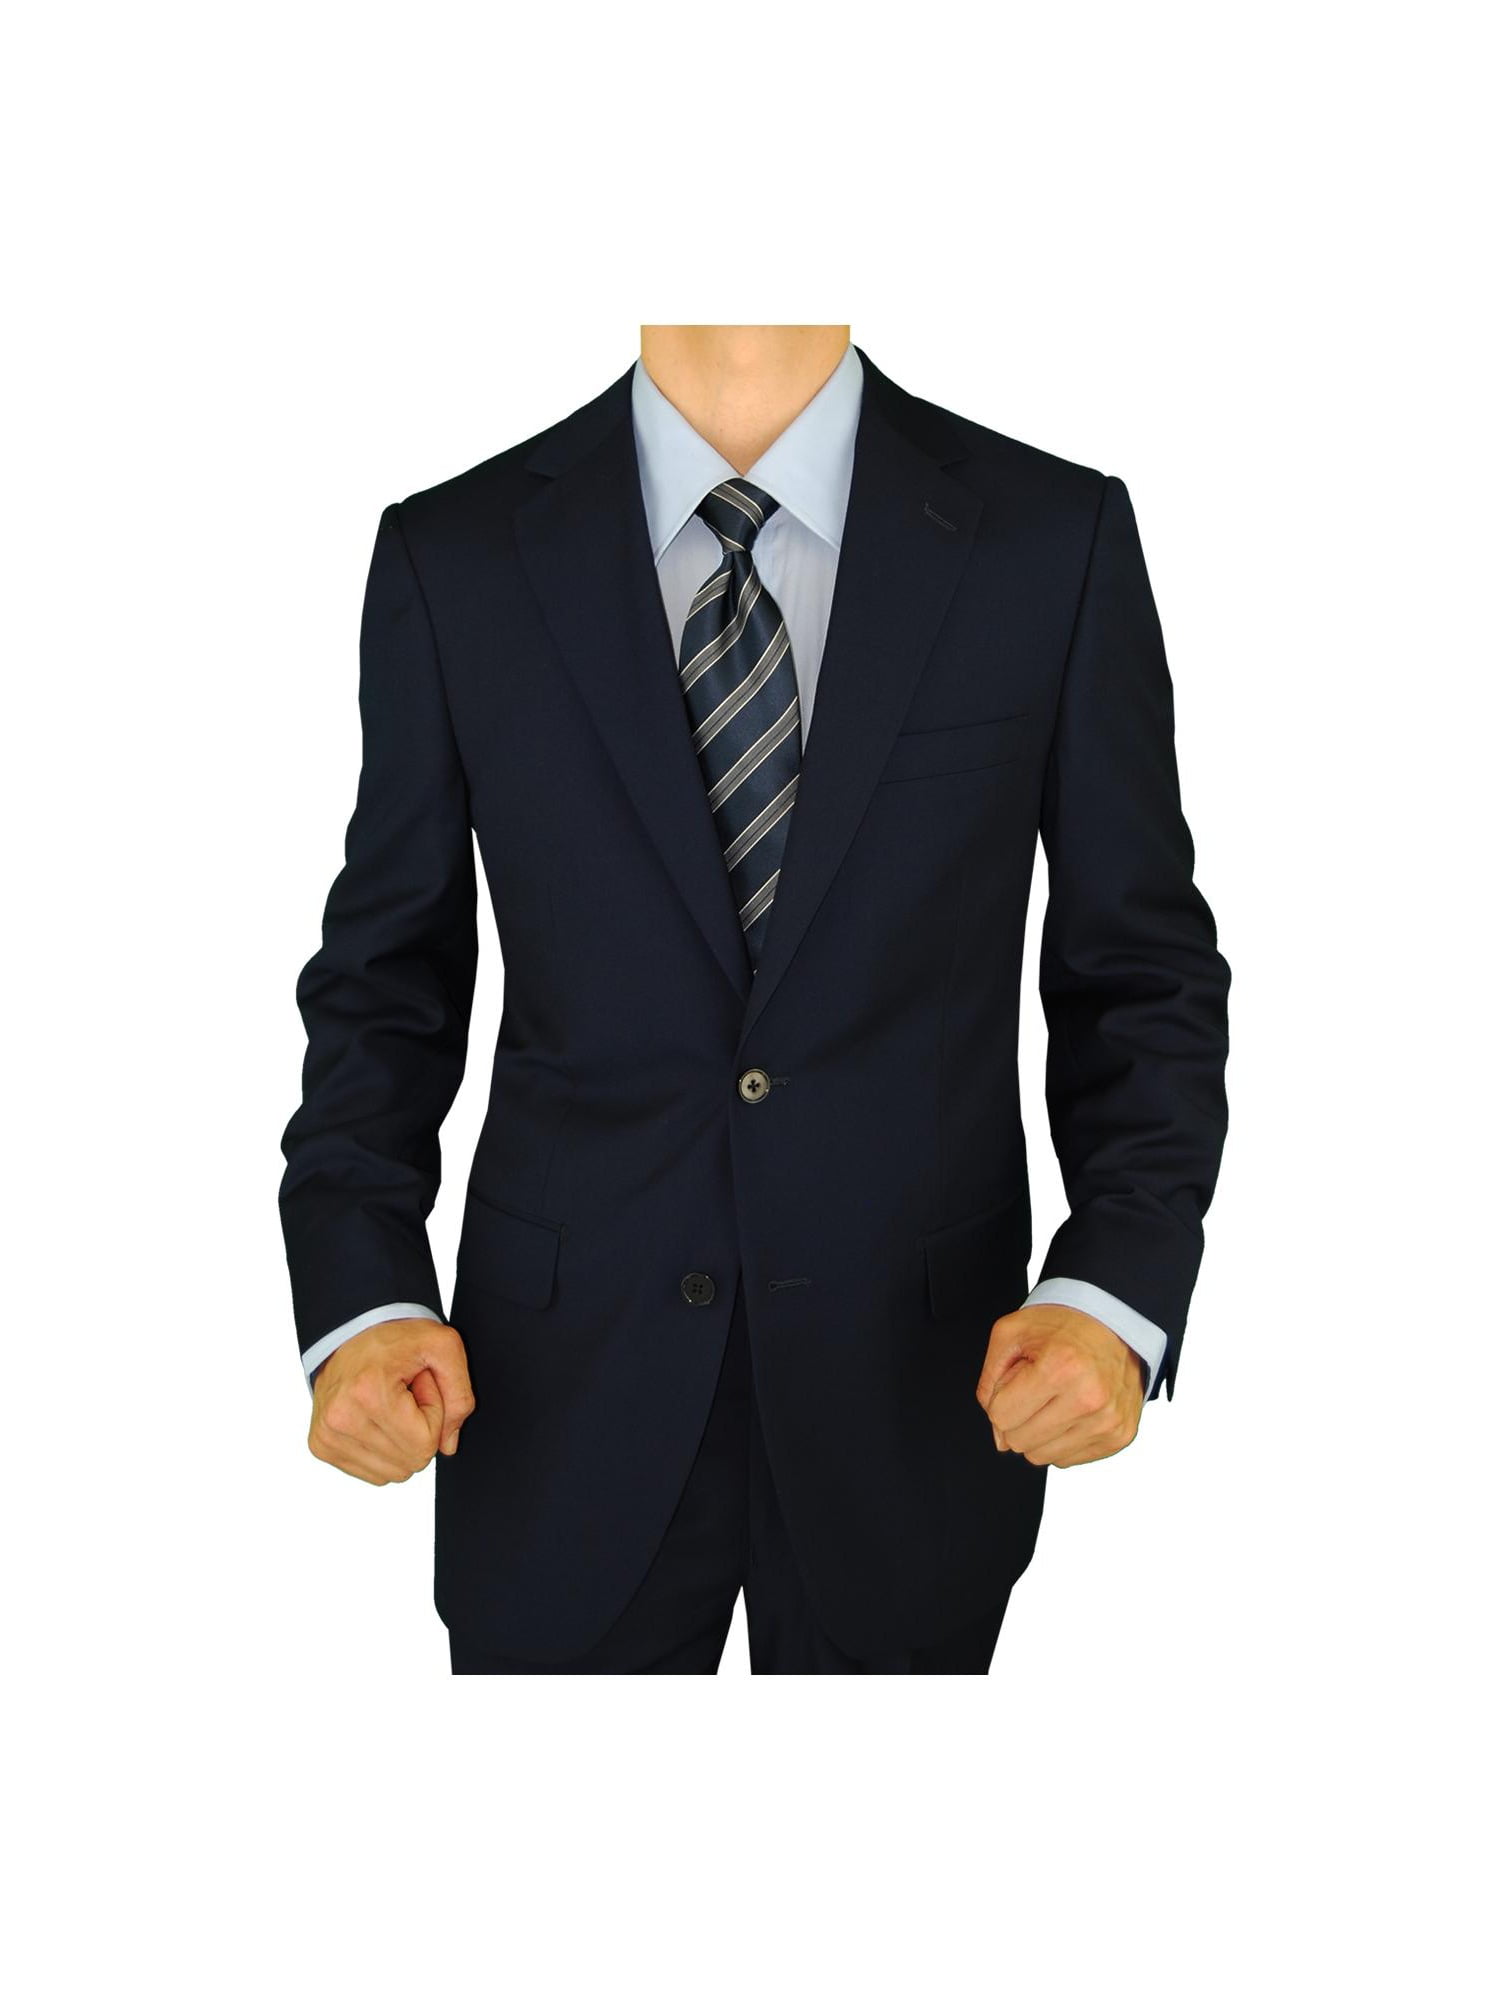 PL Men's Black/Navy Modern Fit Two-Button Blazer Suit Separate Jacket 